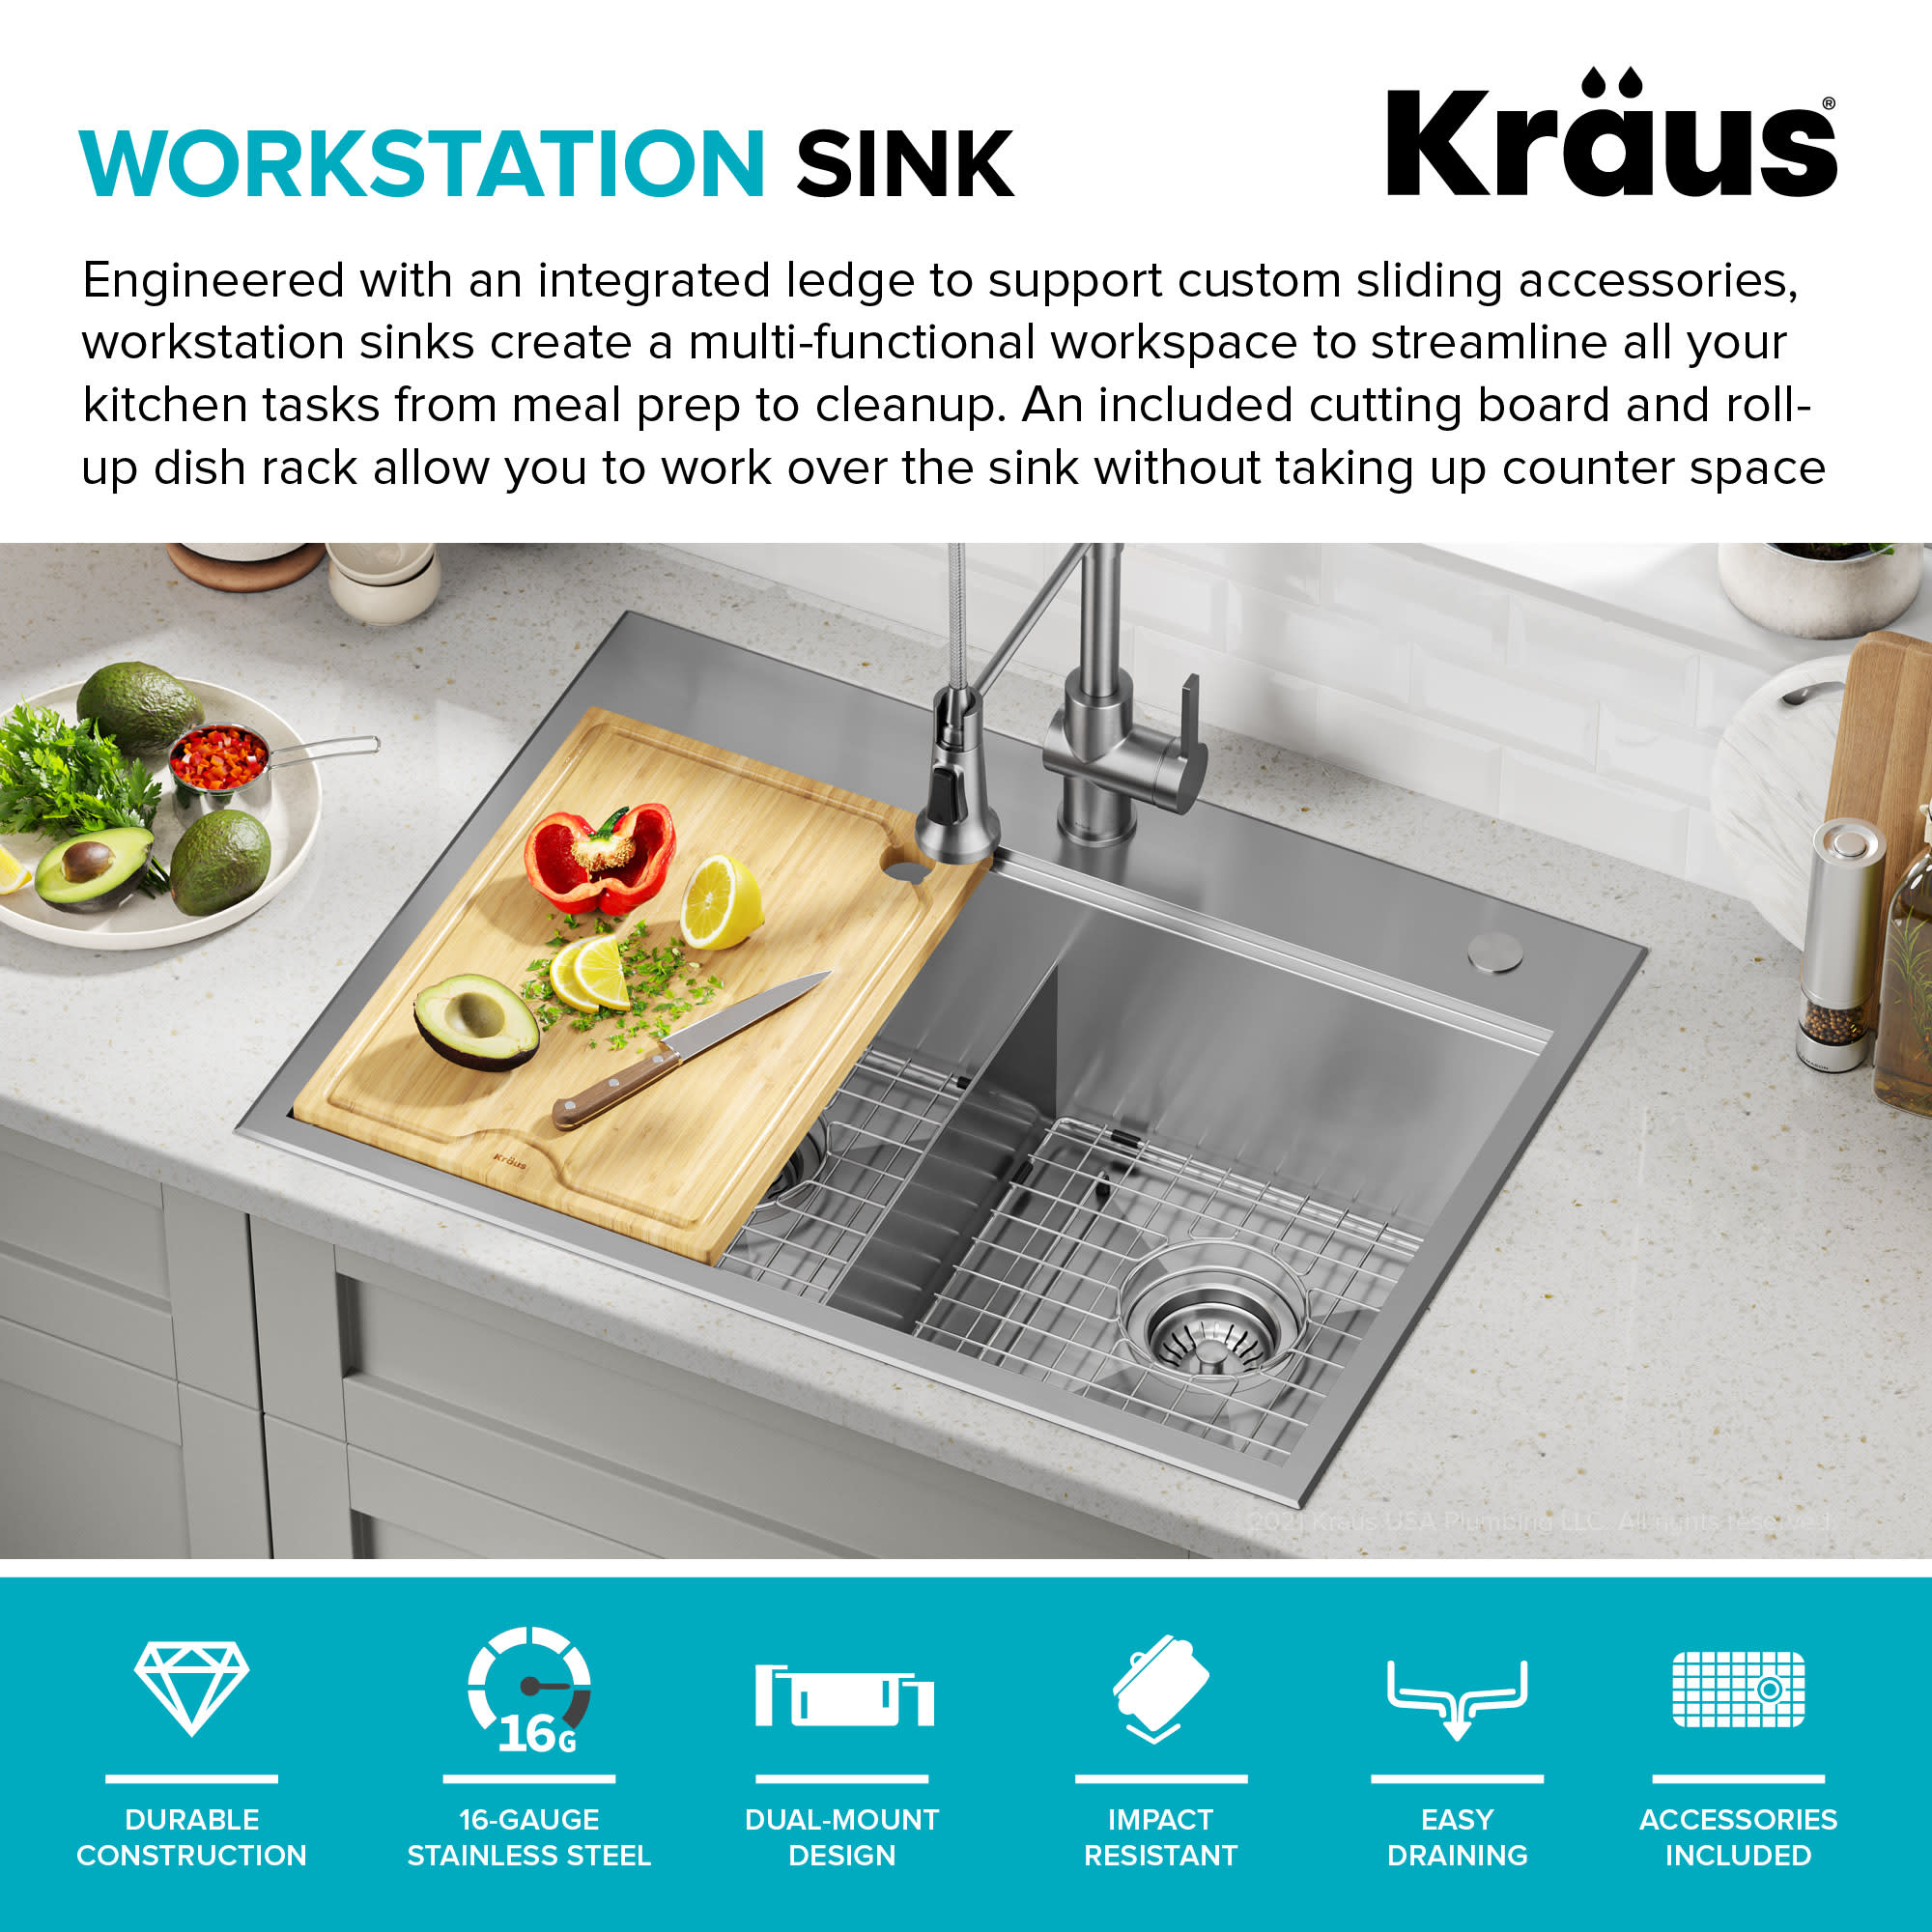 Kraus USA, Accessories, Roll-Up Dish Racks